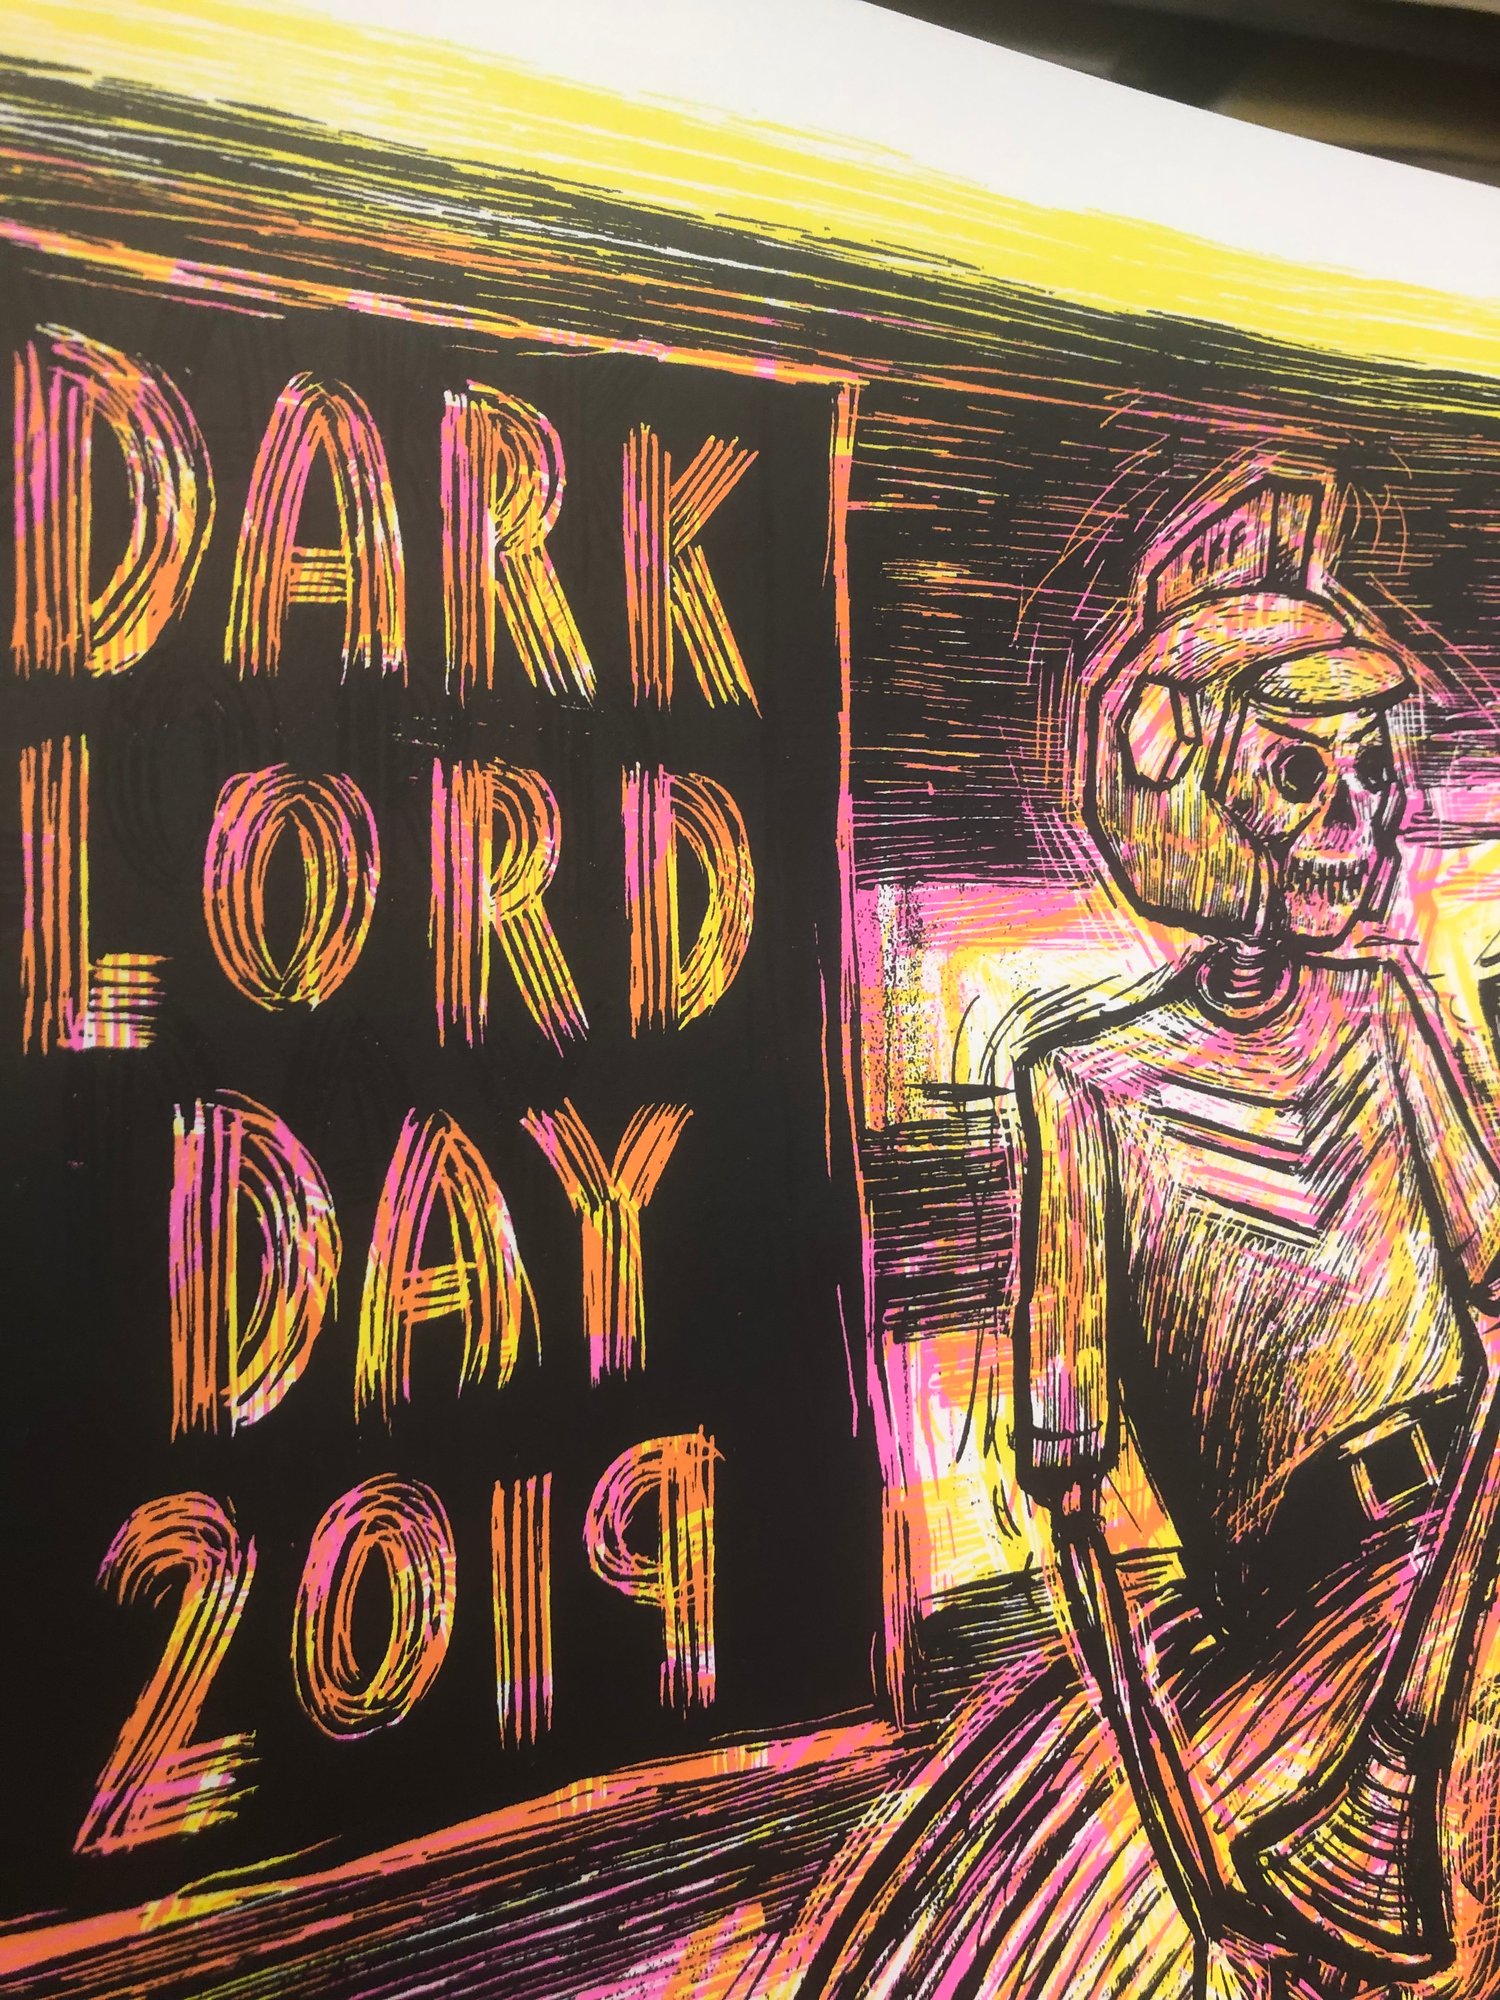 2019 Dark Lord Day poster Ground Up Press Artwork by Dan Grzeca